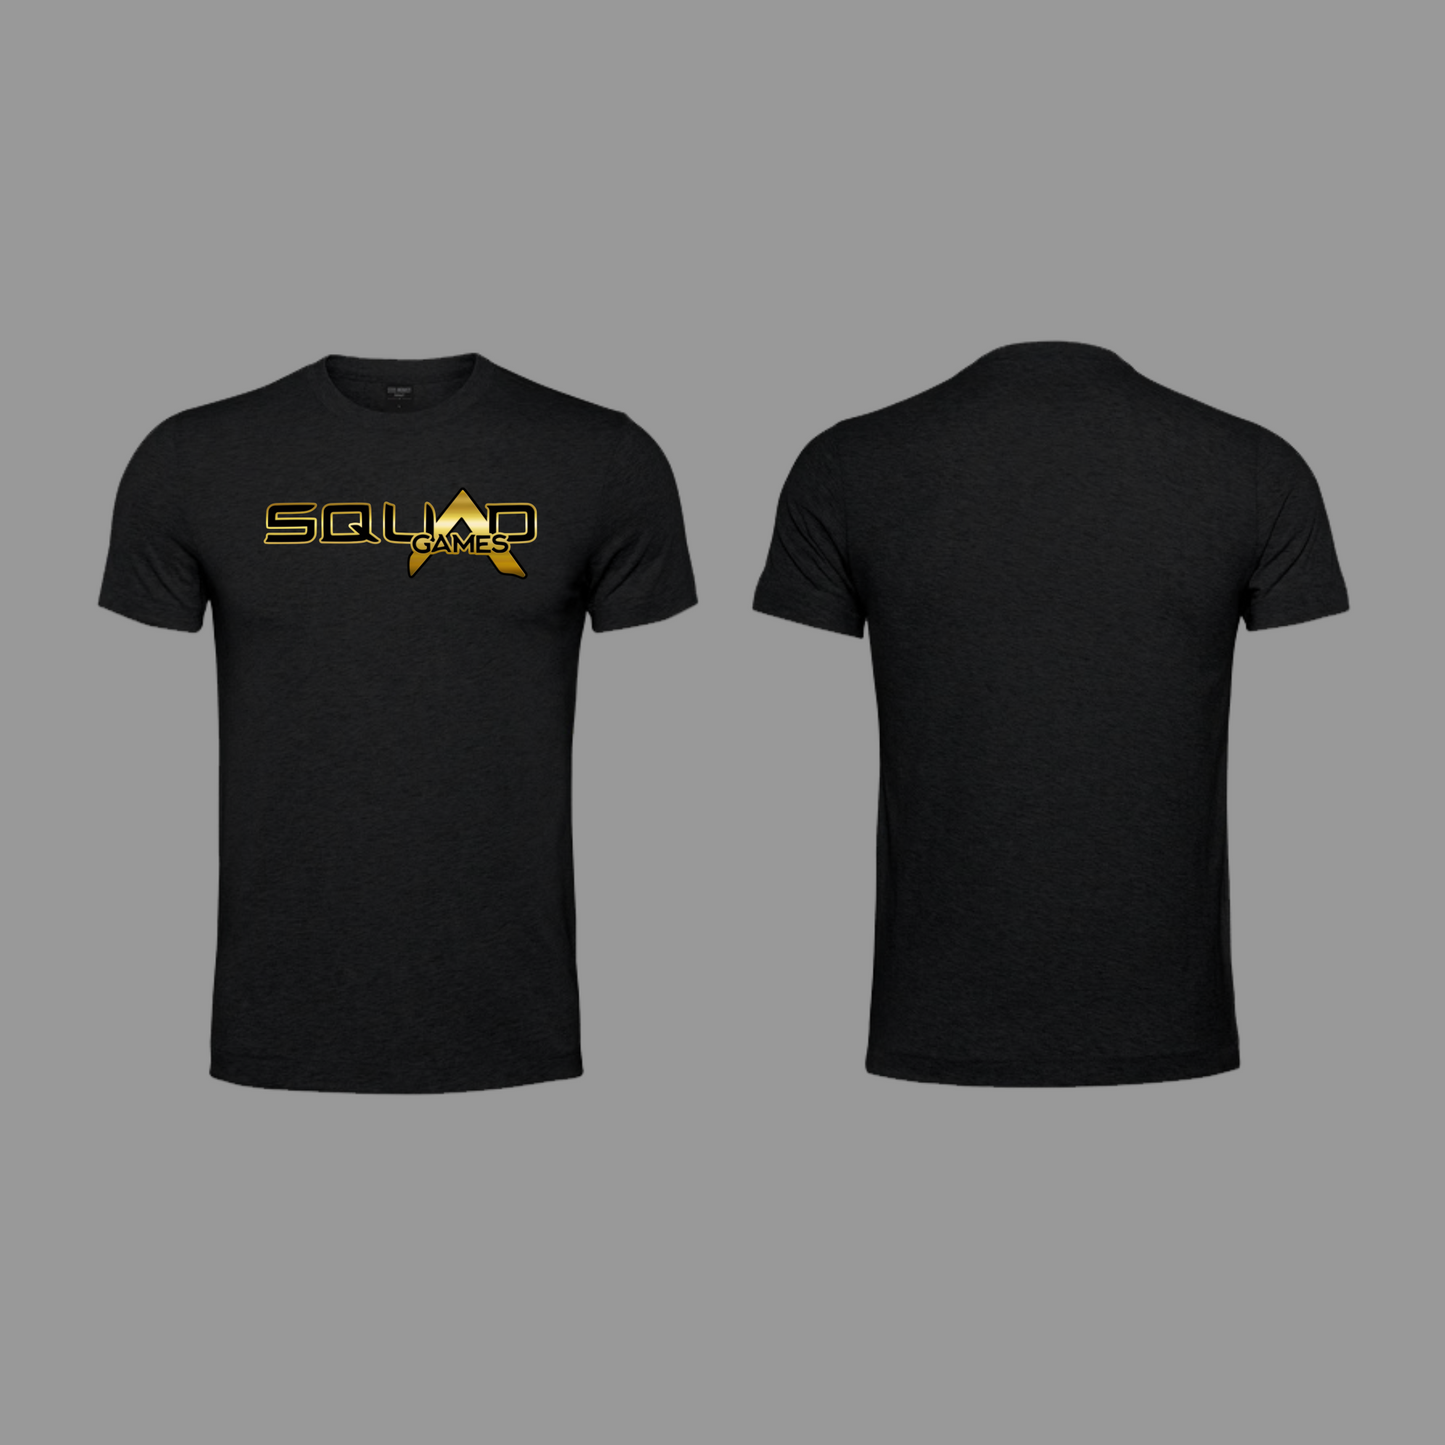 Squad Games - Supporter Merch - Tshirt